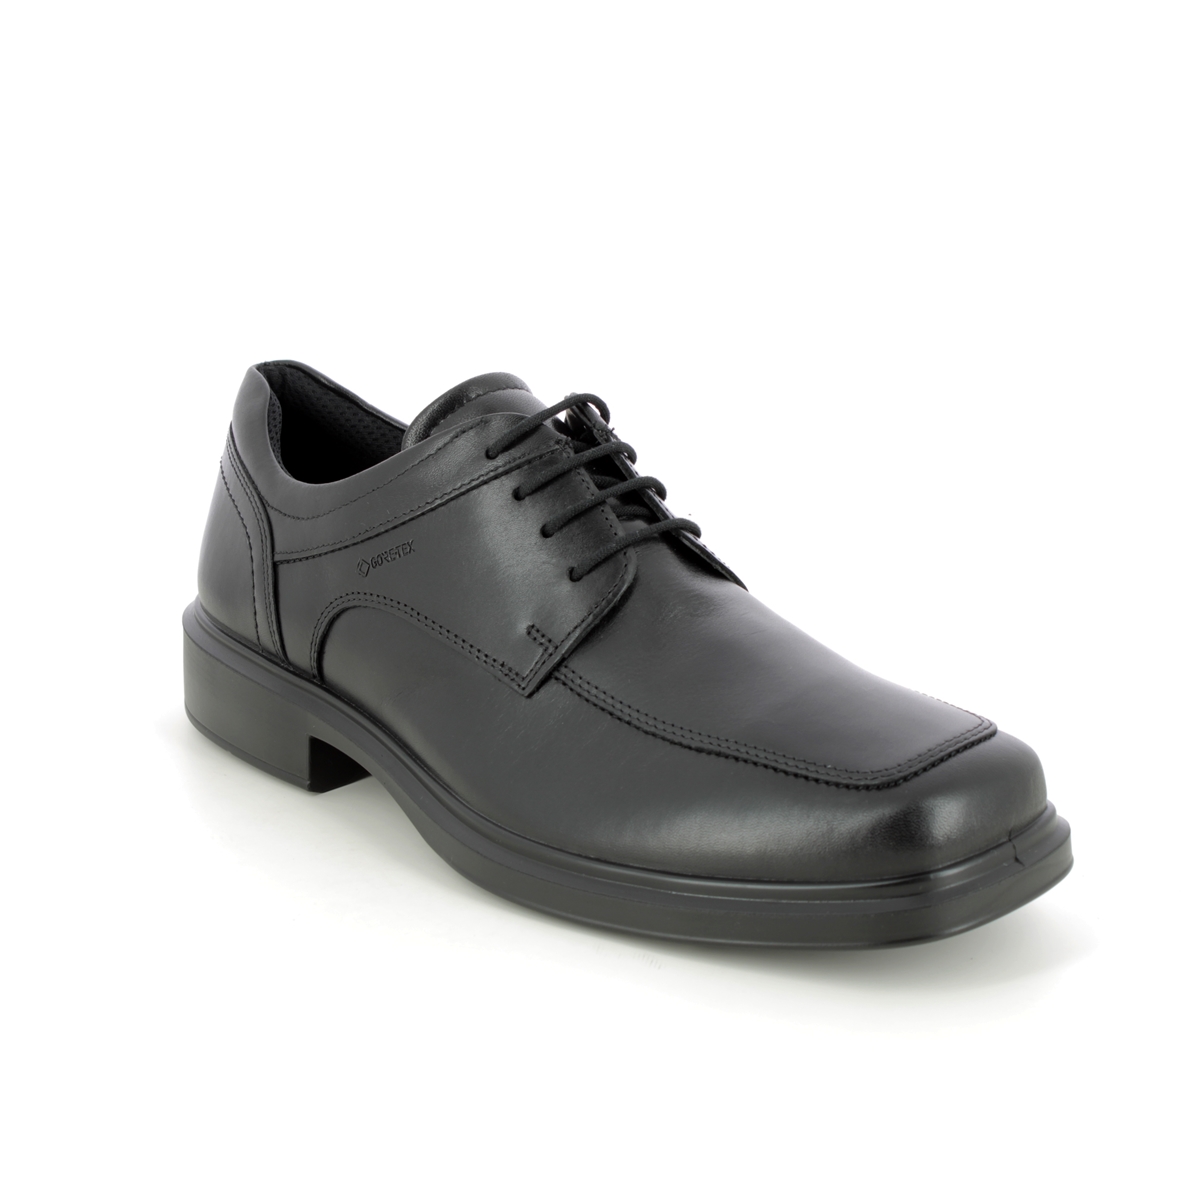 Ecco Helsinki 2 Gtx Black Leather Mens Formal Shoes 500204-01001 In Size 42 In Plain Black Leather